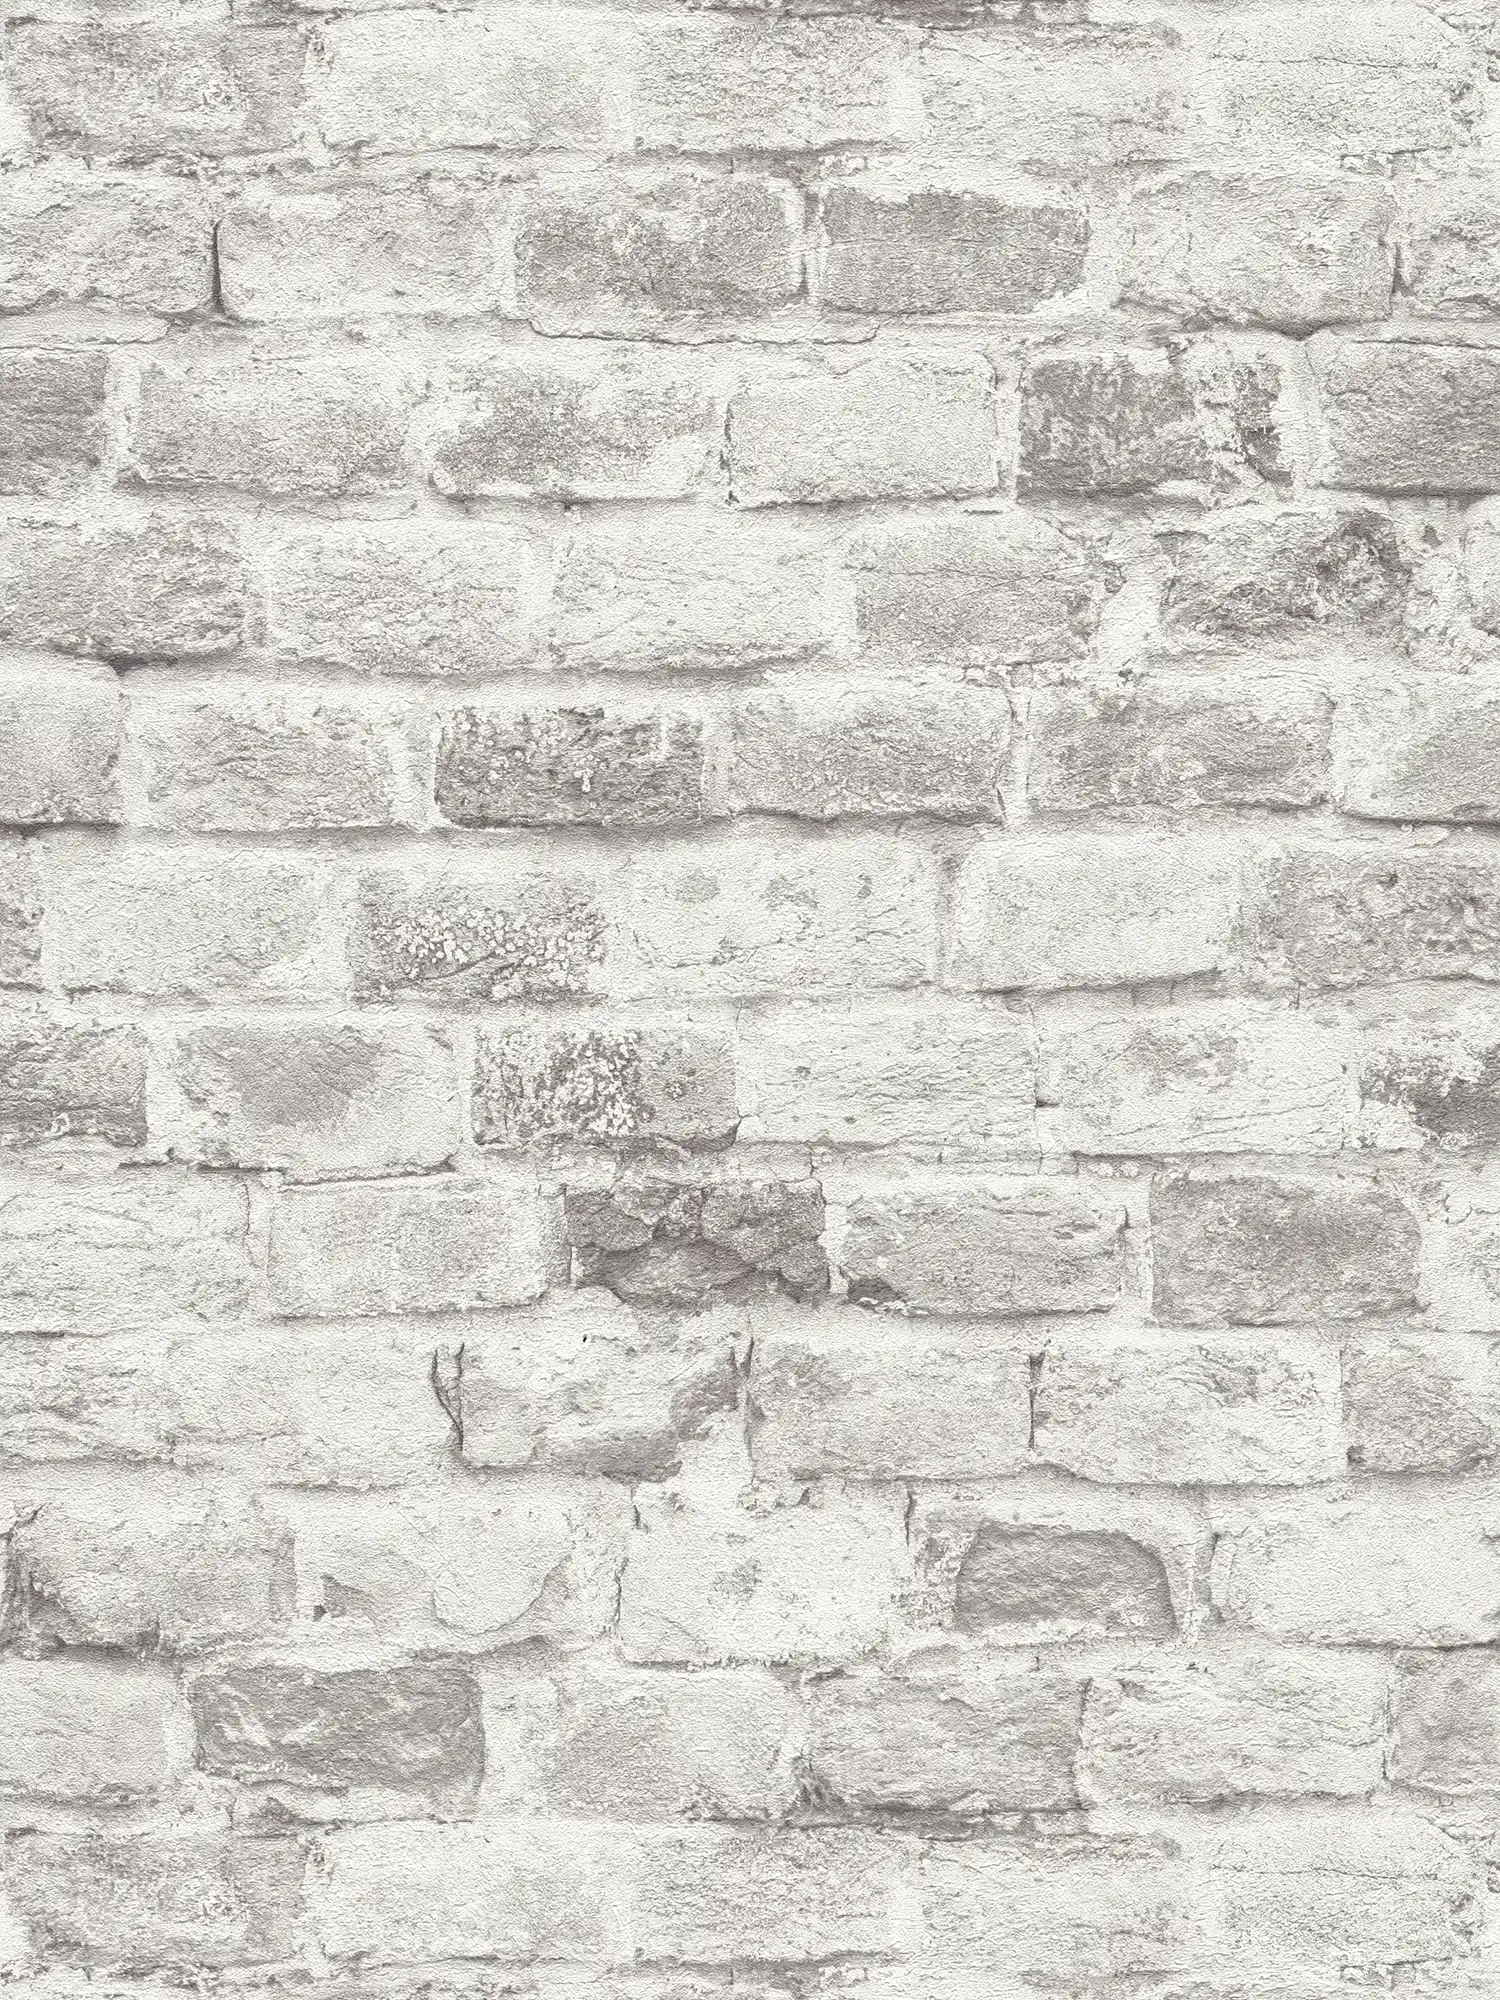 Brick wall non-woven wallpaper in stone look - grey, grey, white
